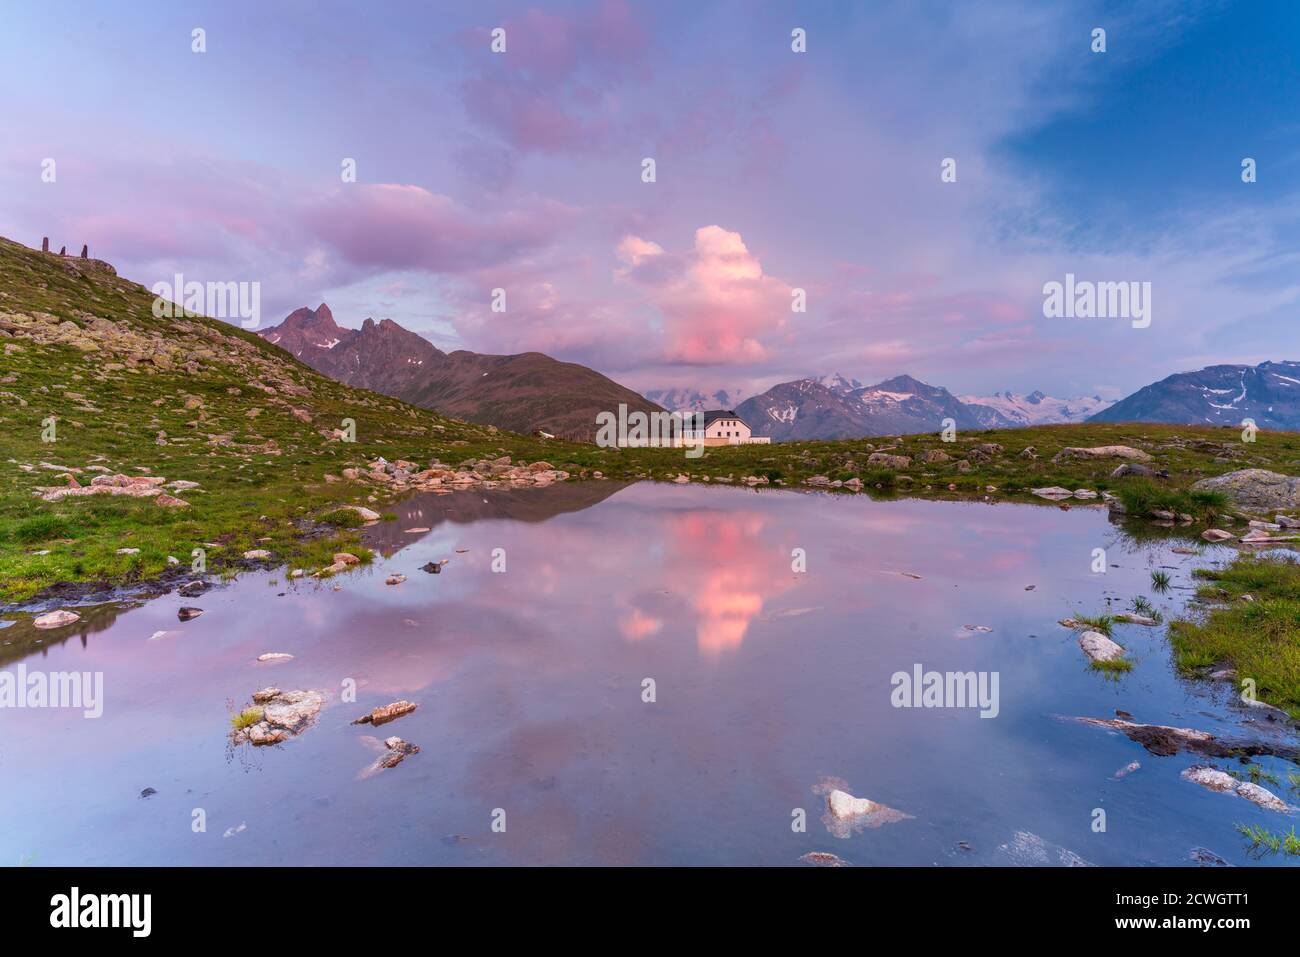 Pink sky at sunset over the small alpine lake, Muottas Muragl, Samedan, canton of Graubunden, Engadine, Switzerland Stock Photo